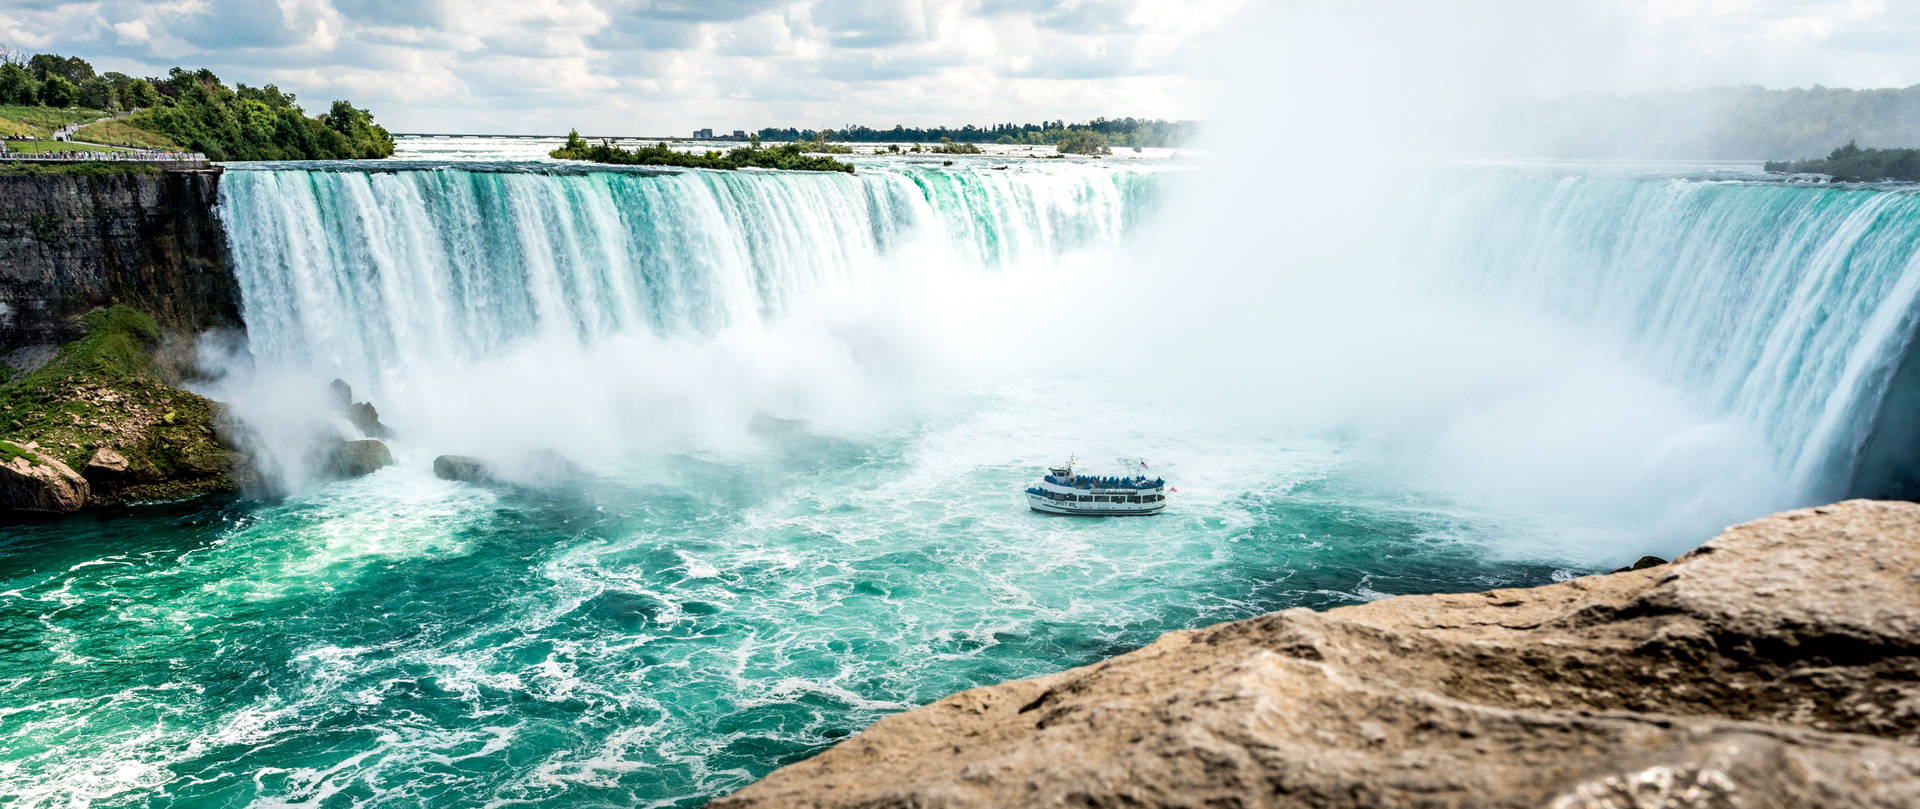 5888X2483 Niagara Falls Wallpaper and Background